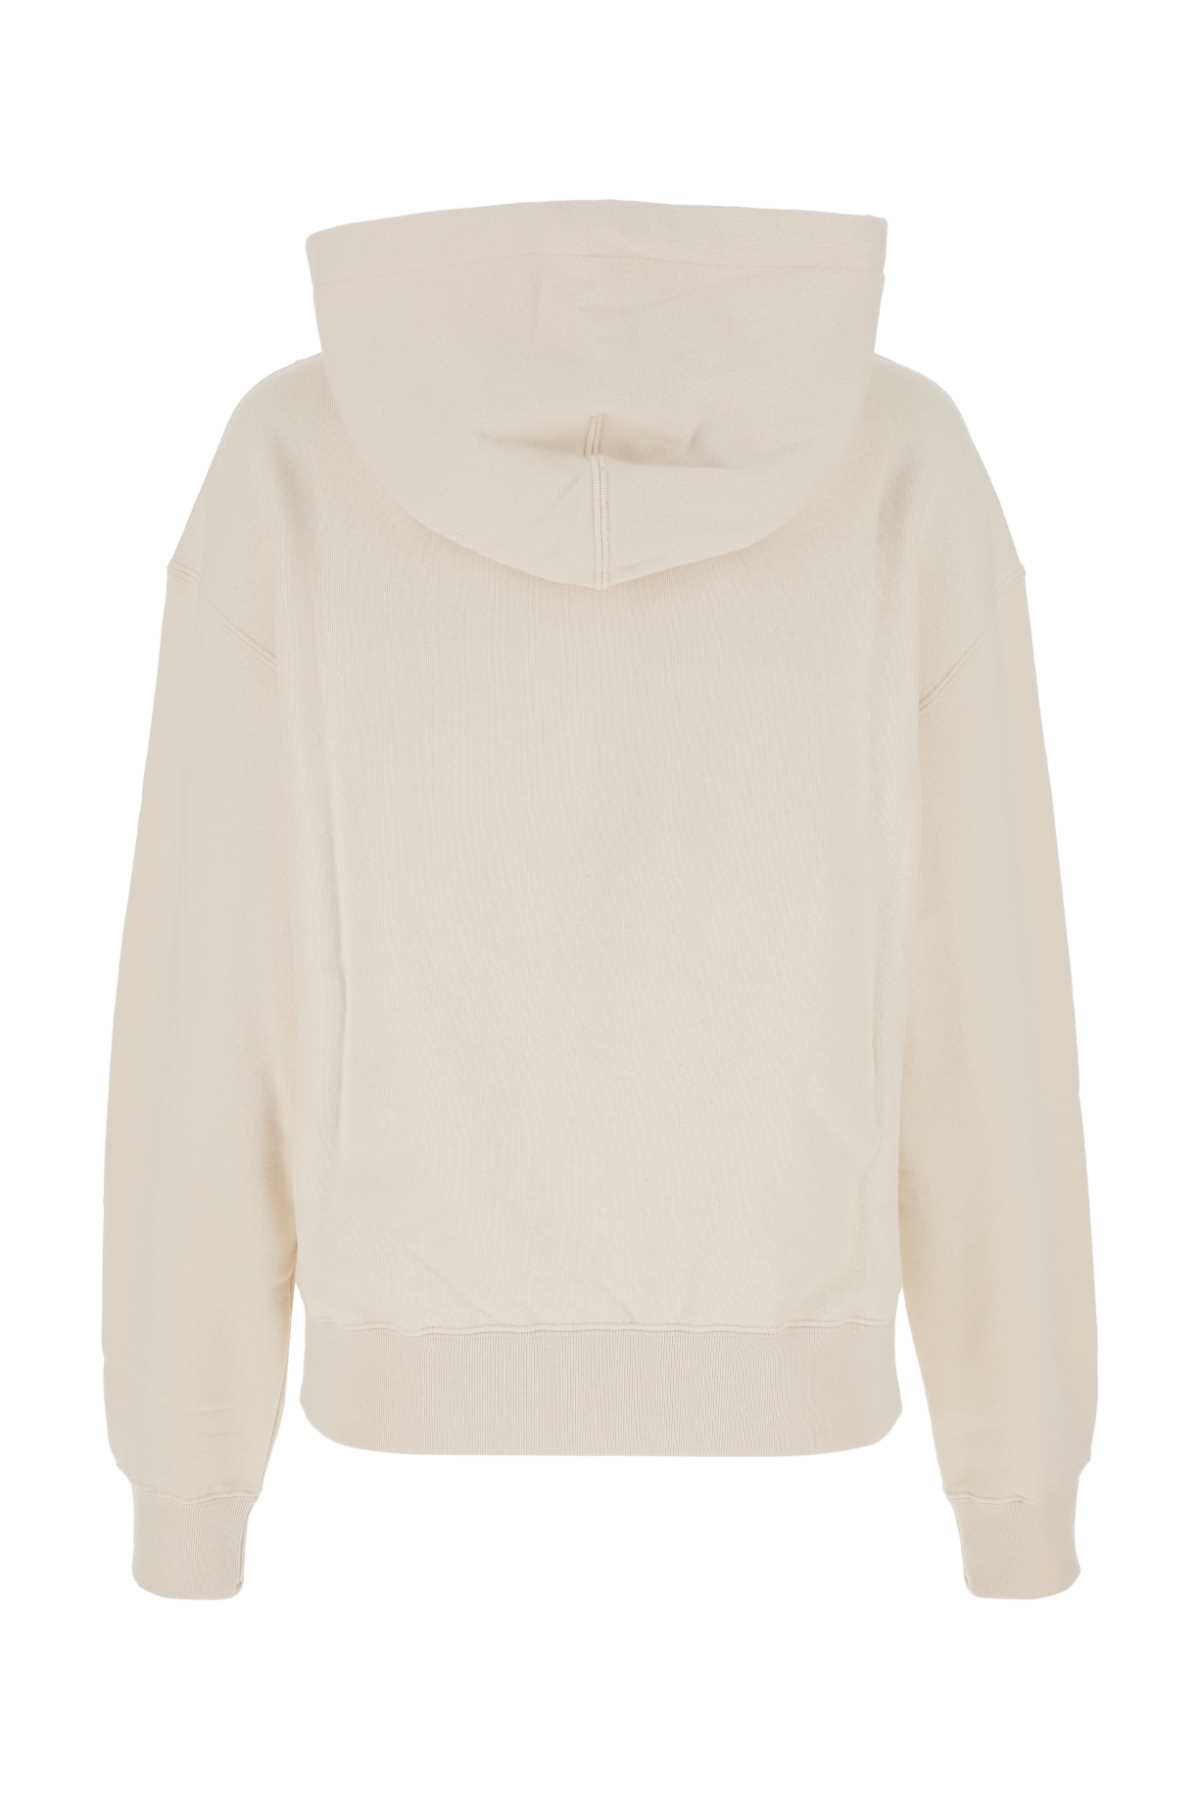 Jil Sander Cream Cotton Oversize Sweatshirt In 279